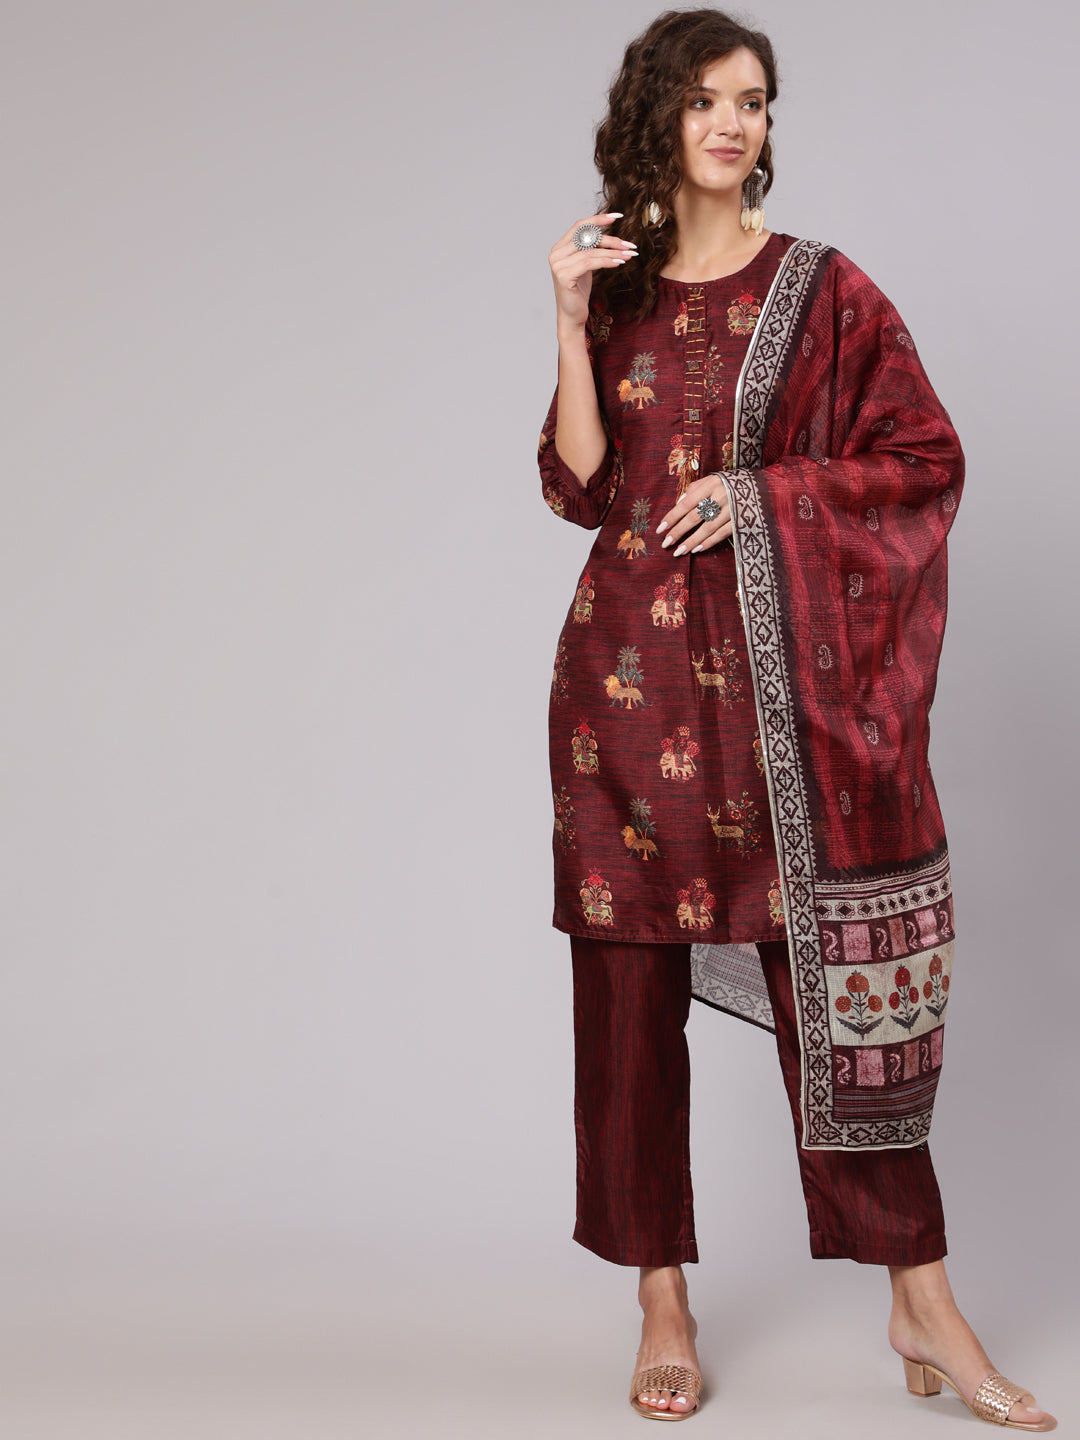 Shop Designer Ethnic Festive wear Co-Ord Set For Women & Girls Online At Jaipur Kurti